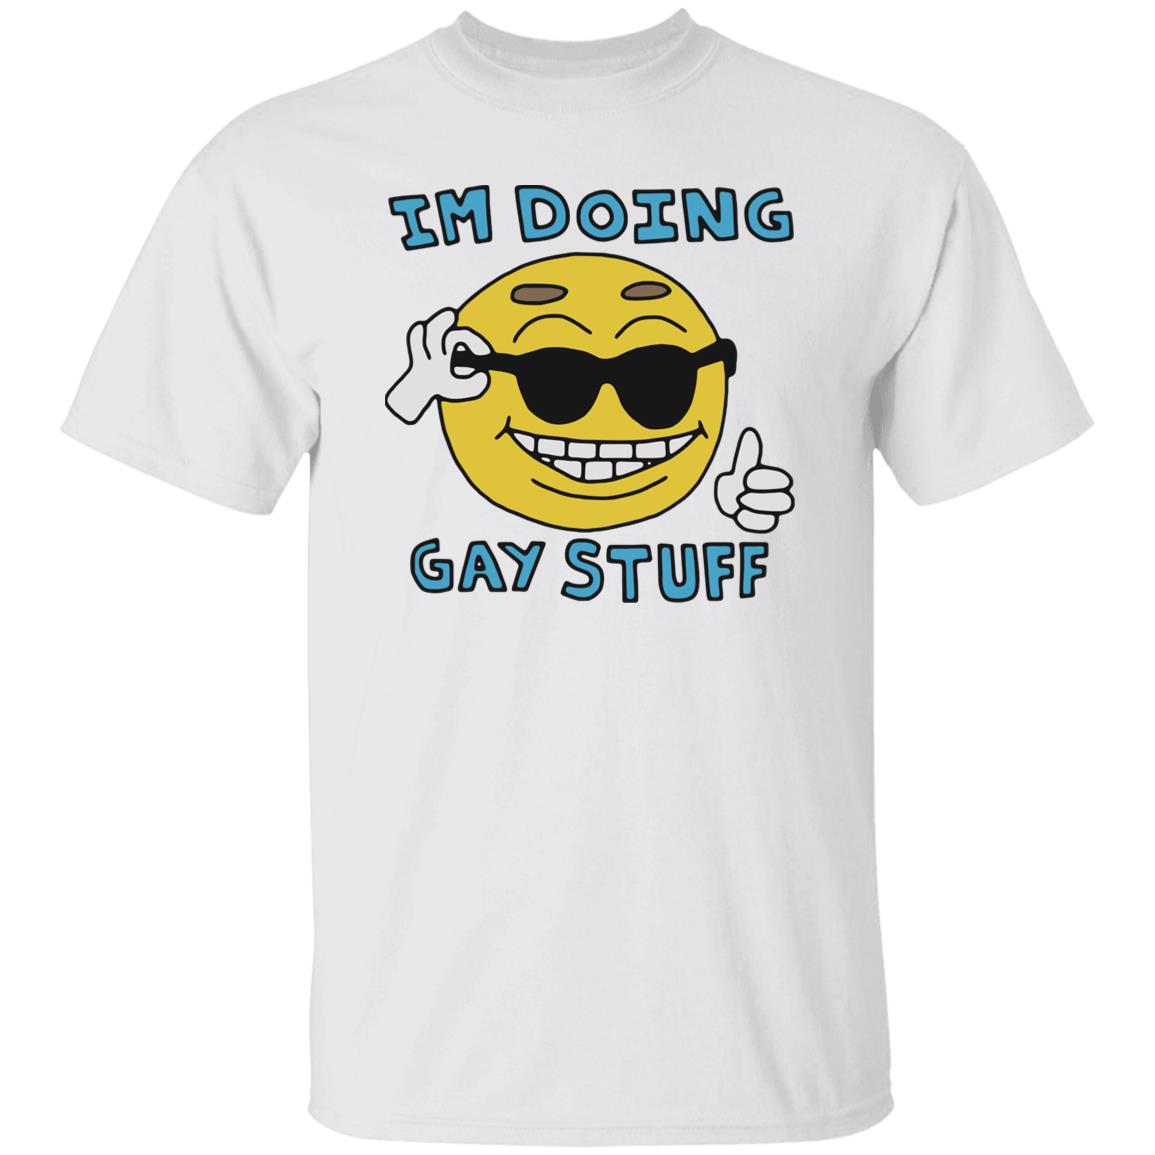 I’m Doing Gay Stuff Shirt